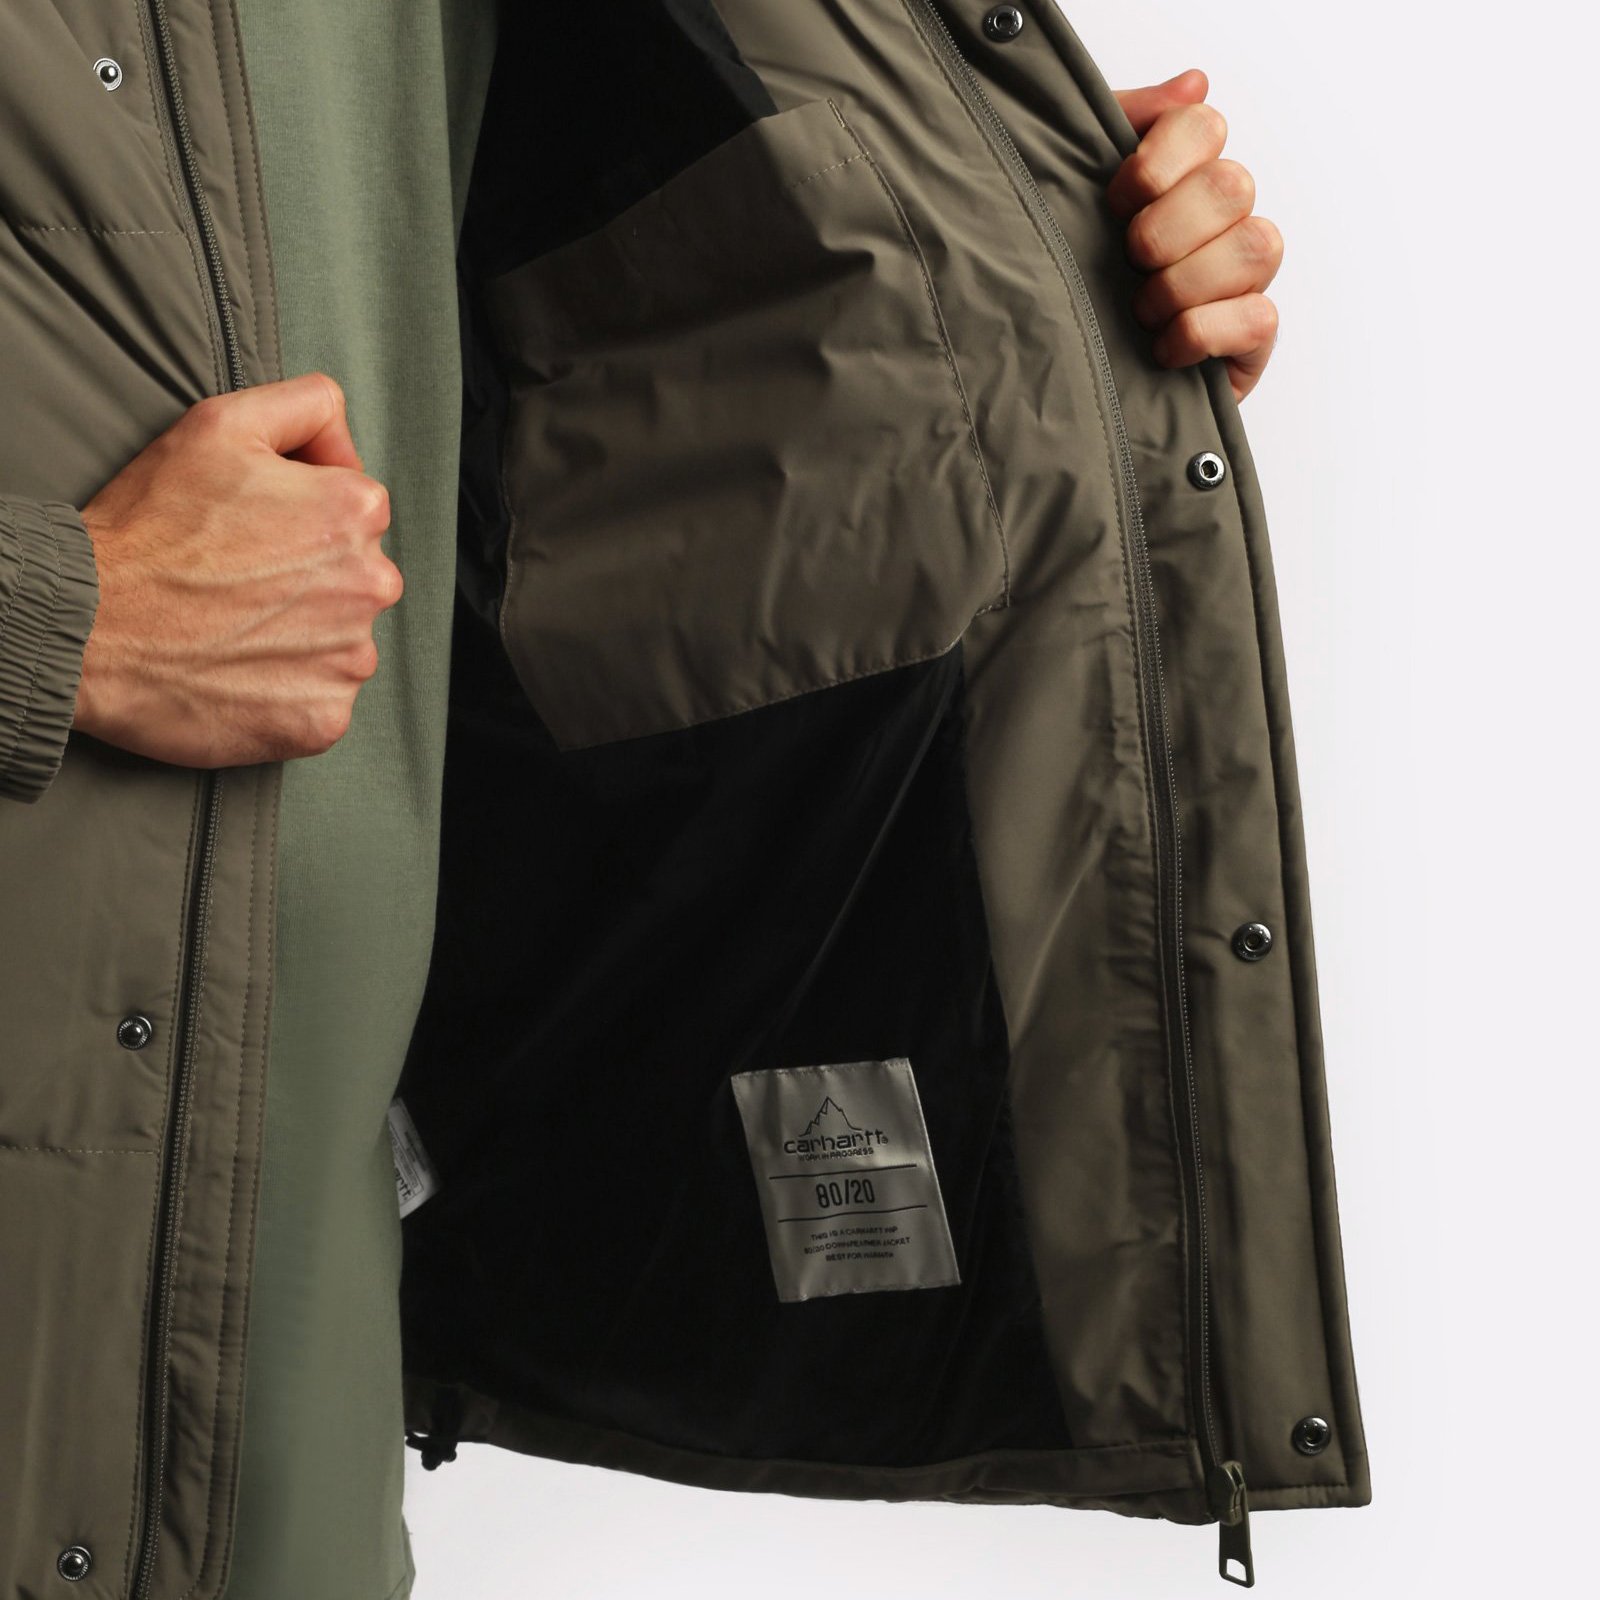 мужская куртка Carhartt WIP Danville Jacket  (I029450-barista/black)  - цена, описание, фото 5